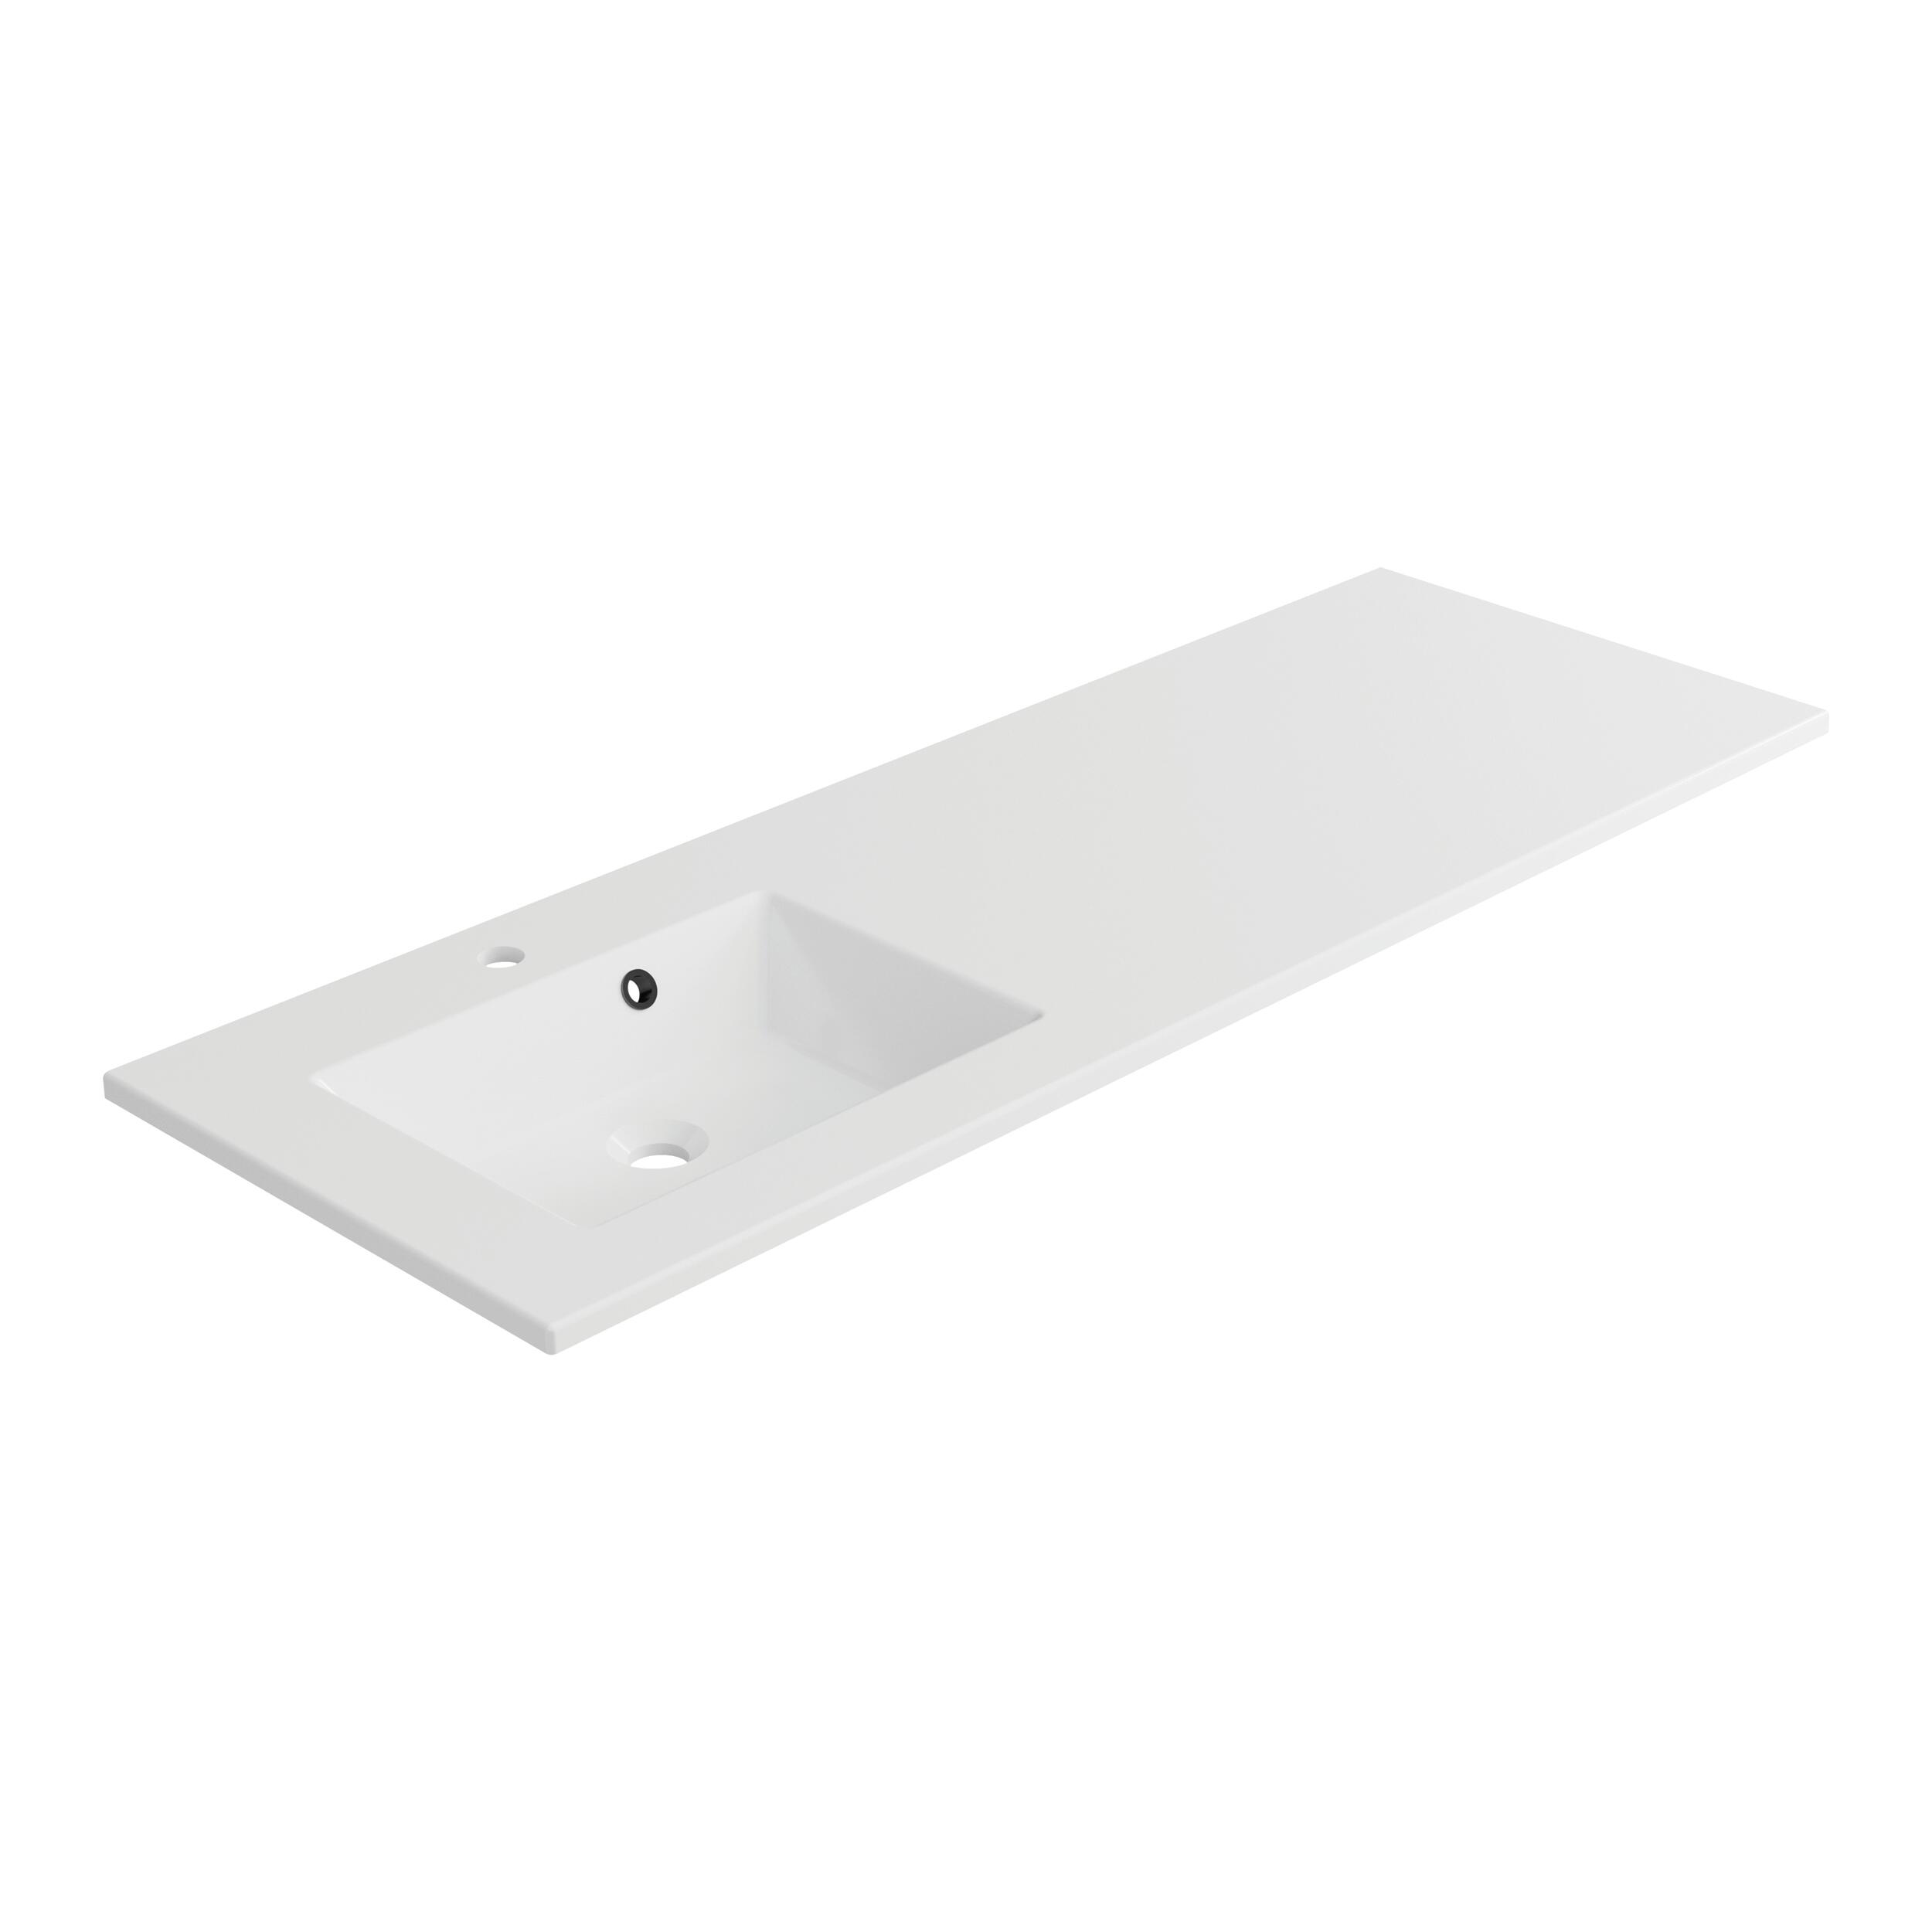 Lavabo modern blanco 136x11.2x48.5 cm